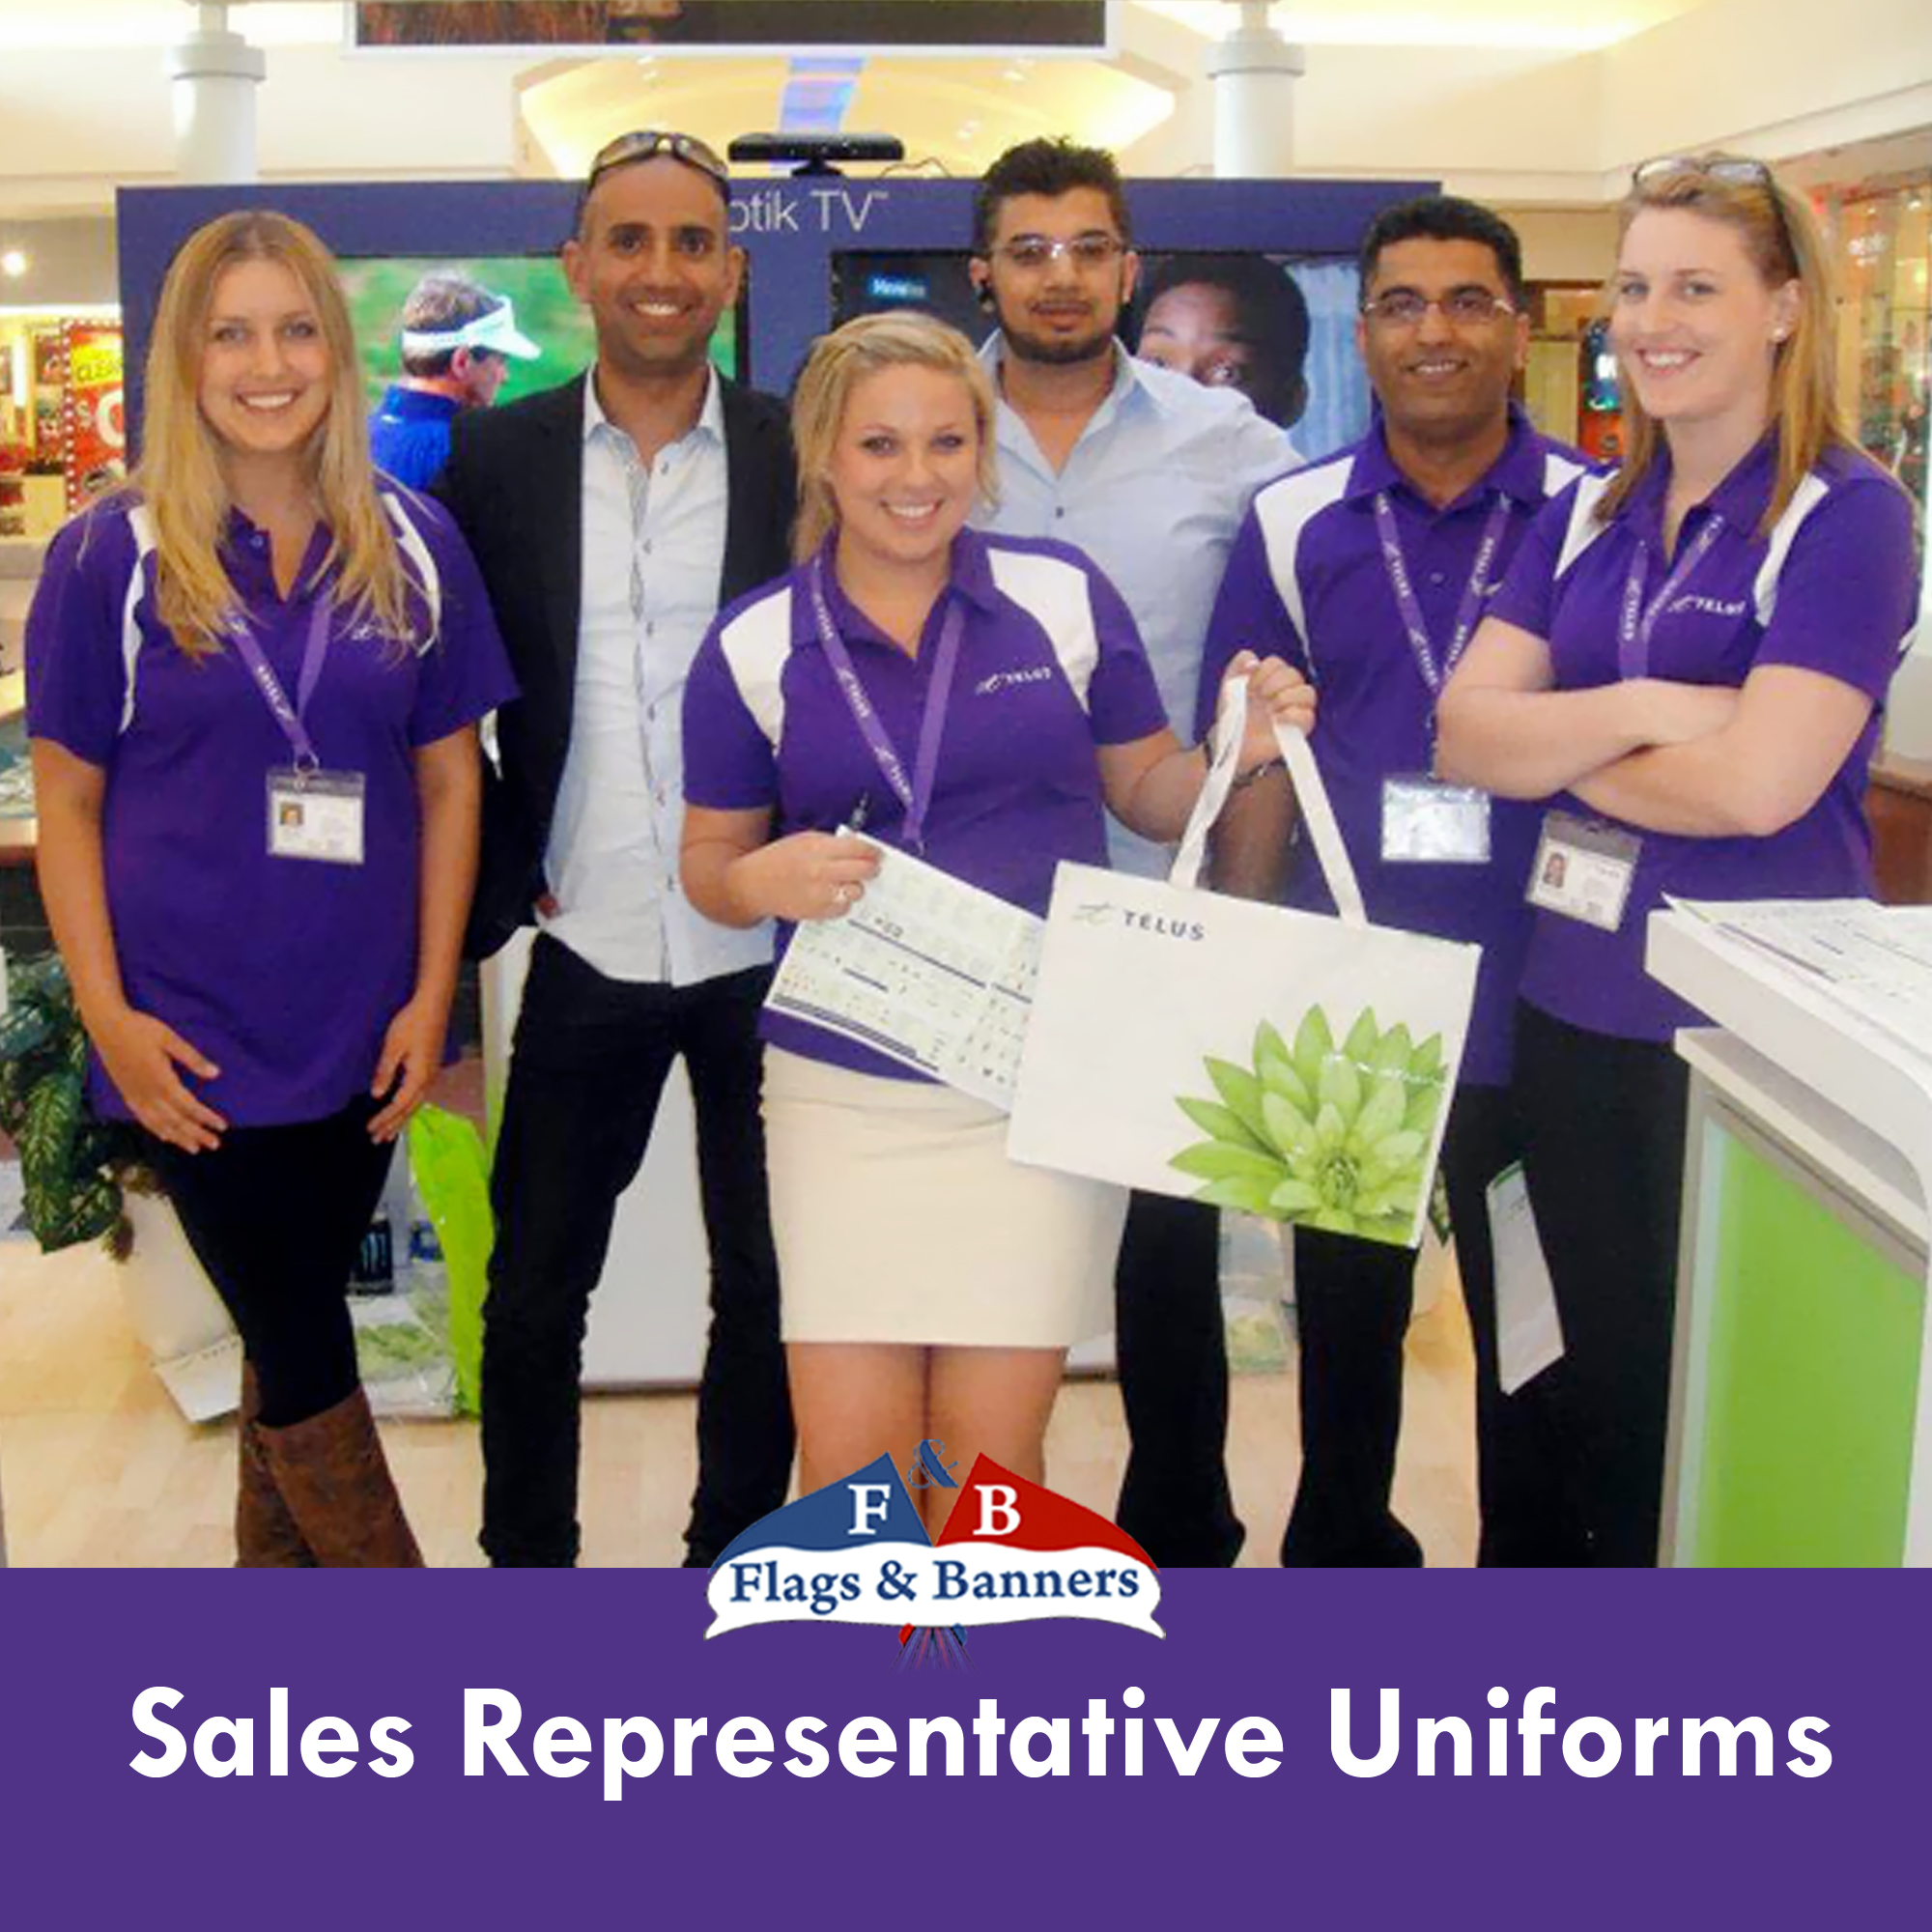 Sales Representative Uniforms 06